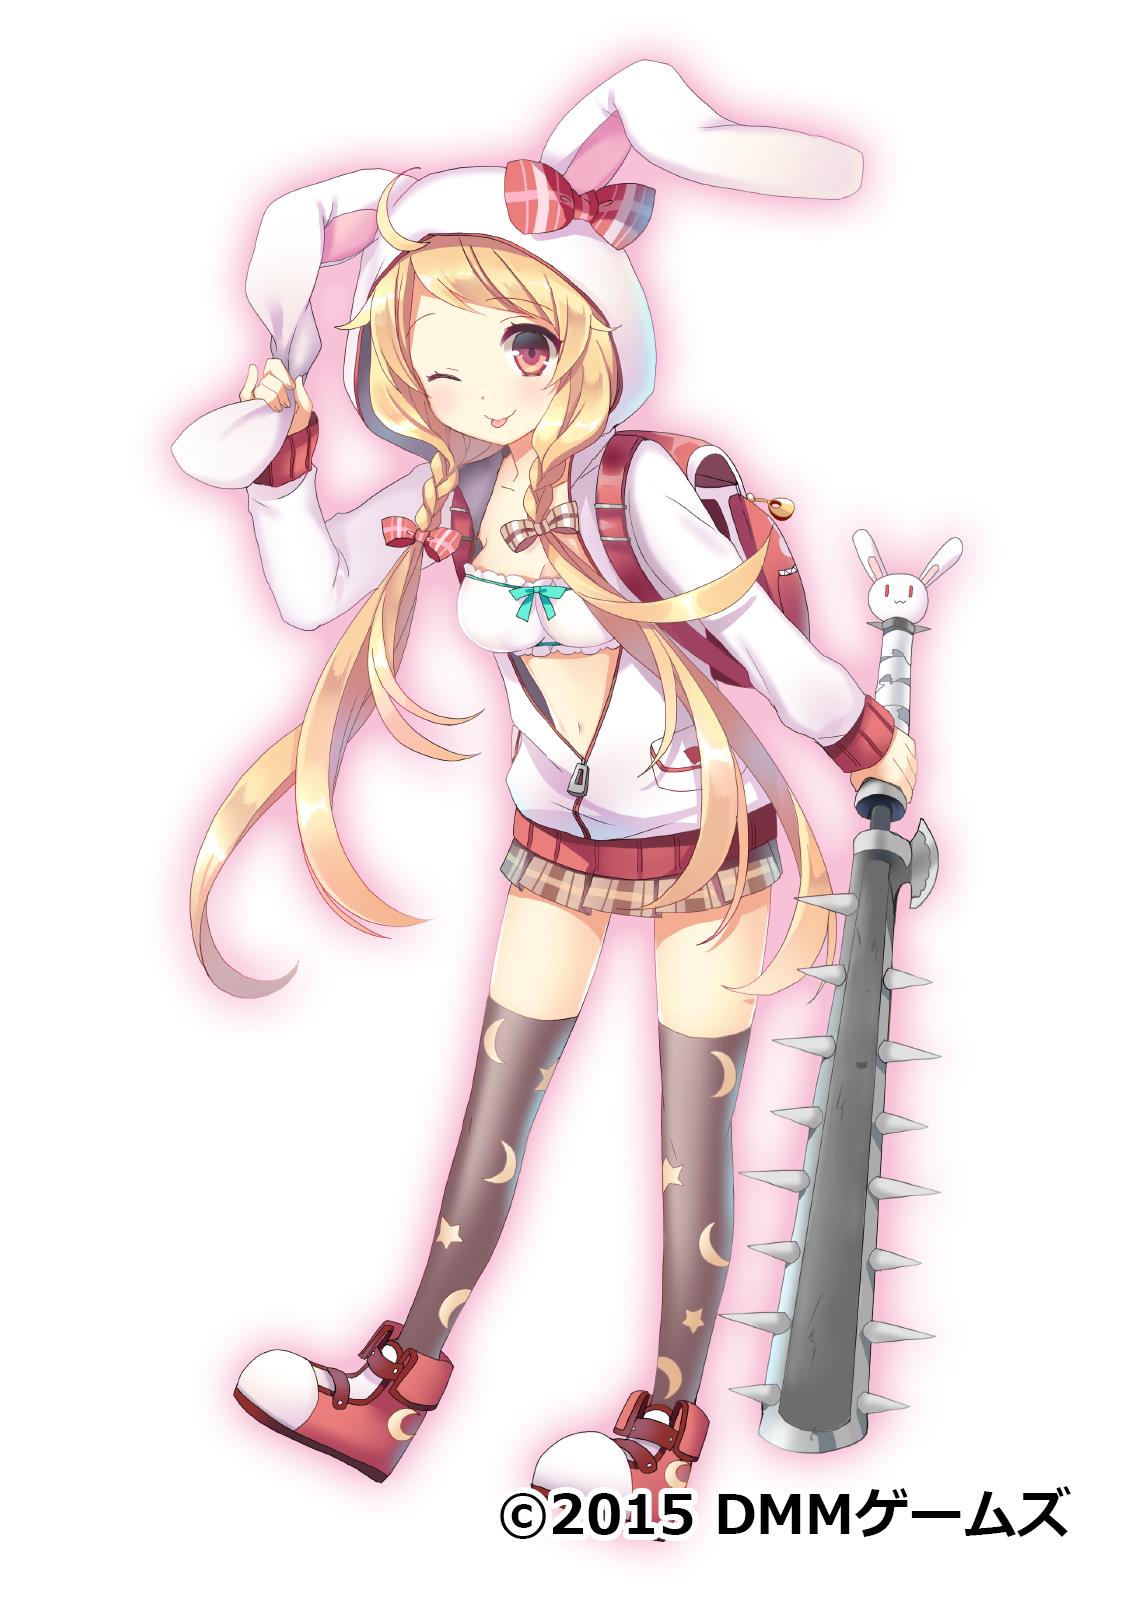 Flower Knight Girl 3人の新キャラクター ススキ サンカクサボテン ウサギノオ 追加を含むアップデートを本日実施 ネトゲブックマーク